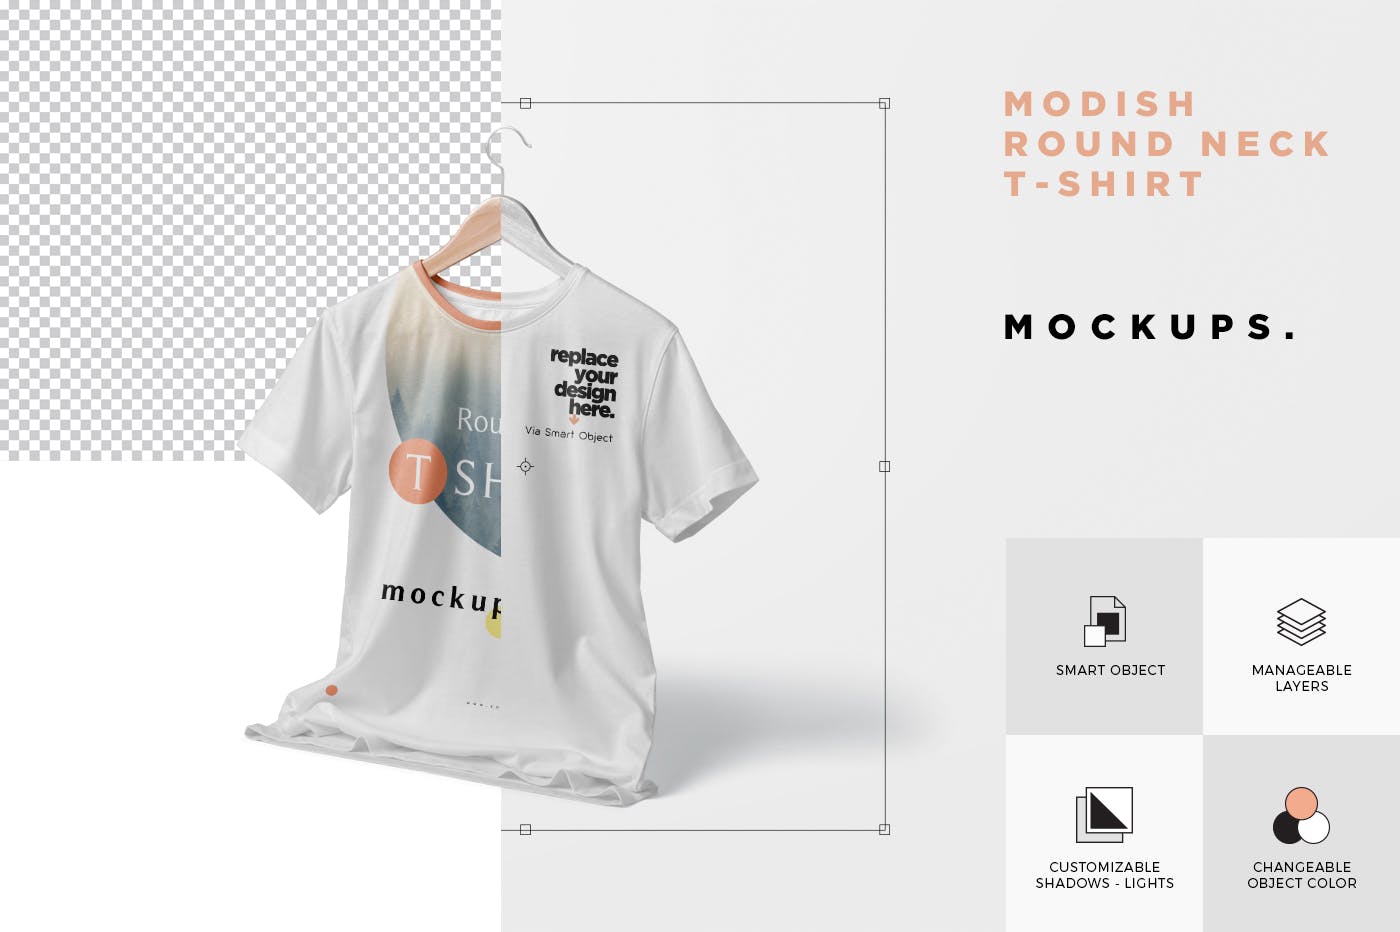 时尚圆领T恤印花设计效果图样机模板 Modish Round Neck T-Shirts Mockups插图(5)